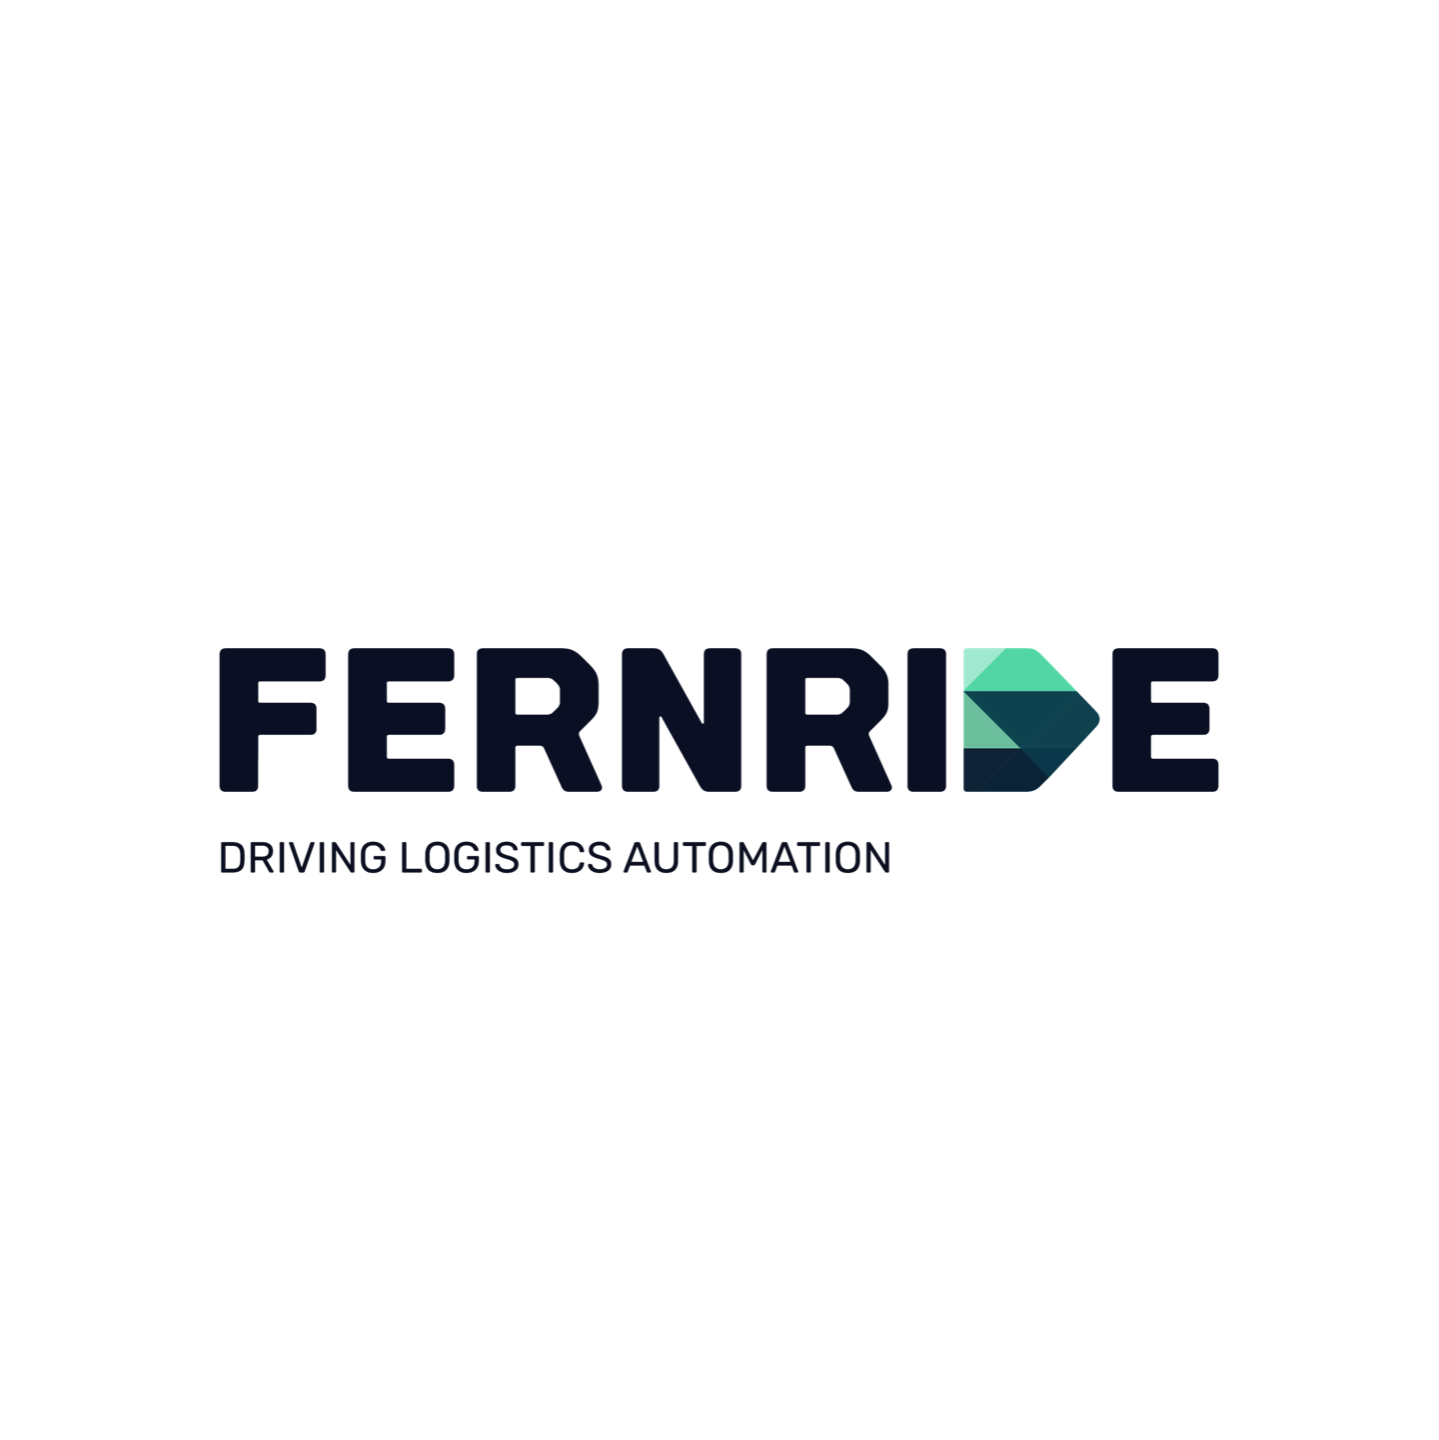 Fernride